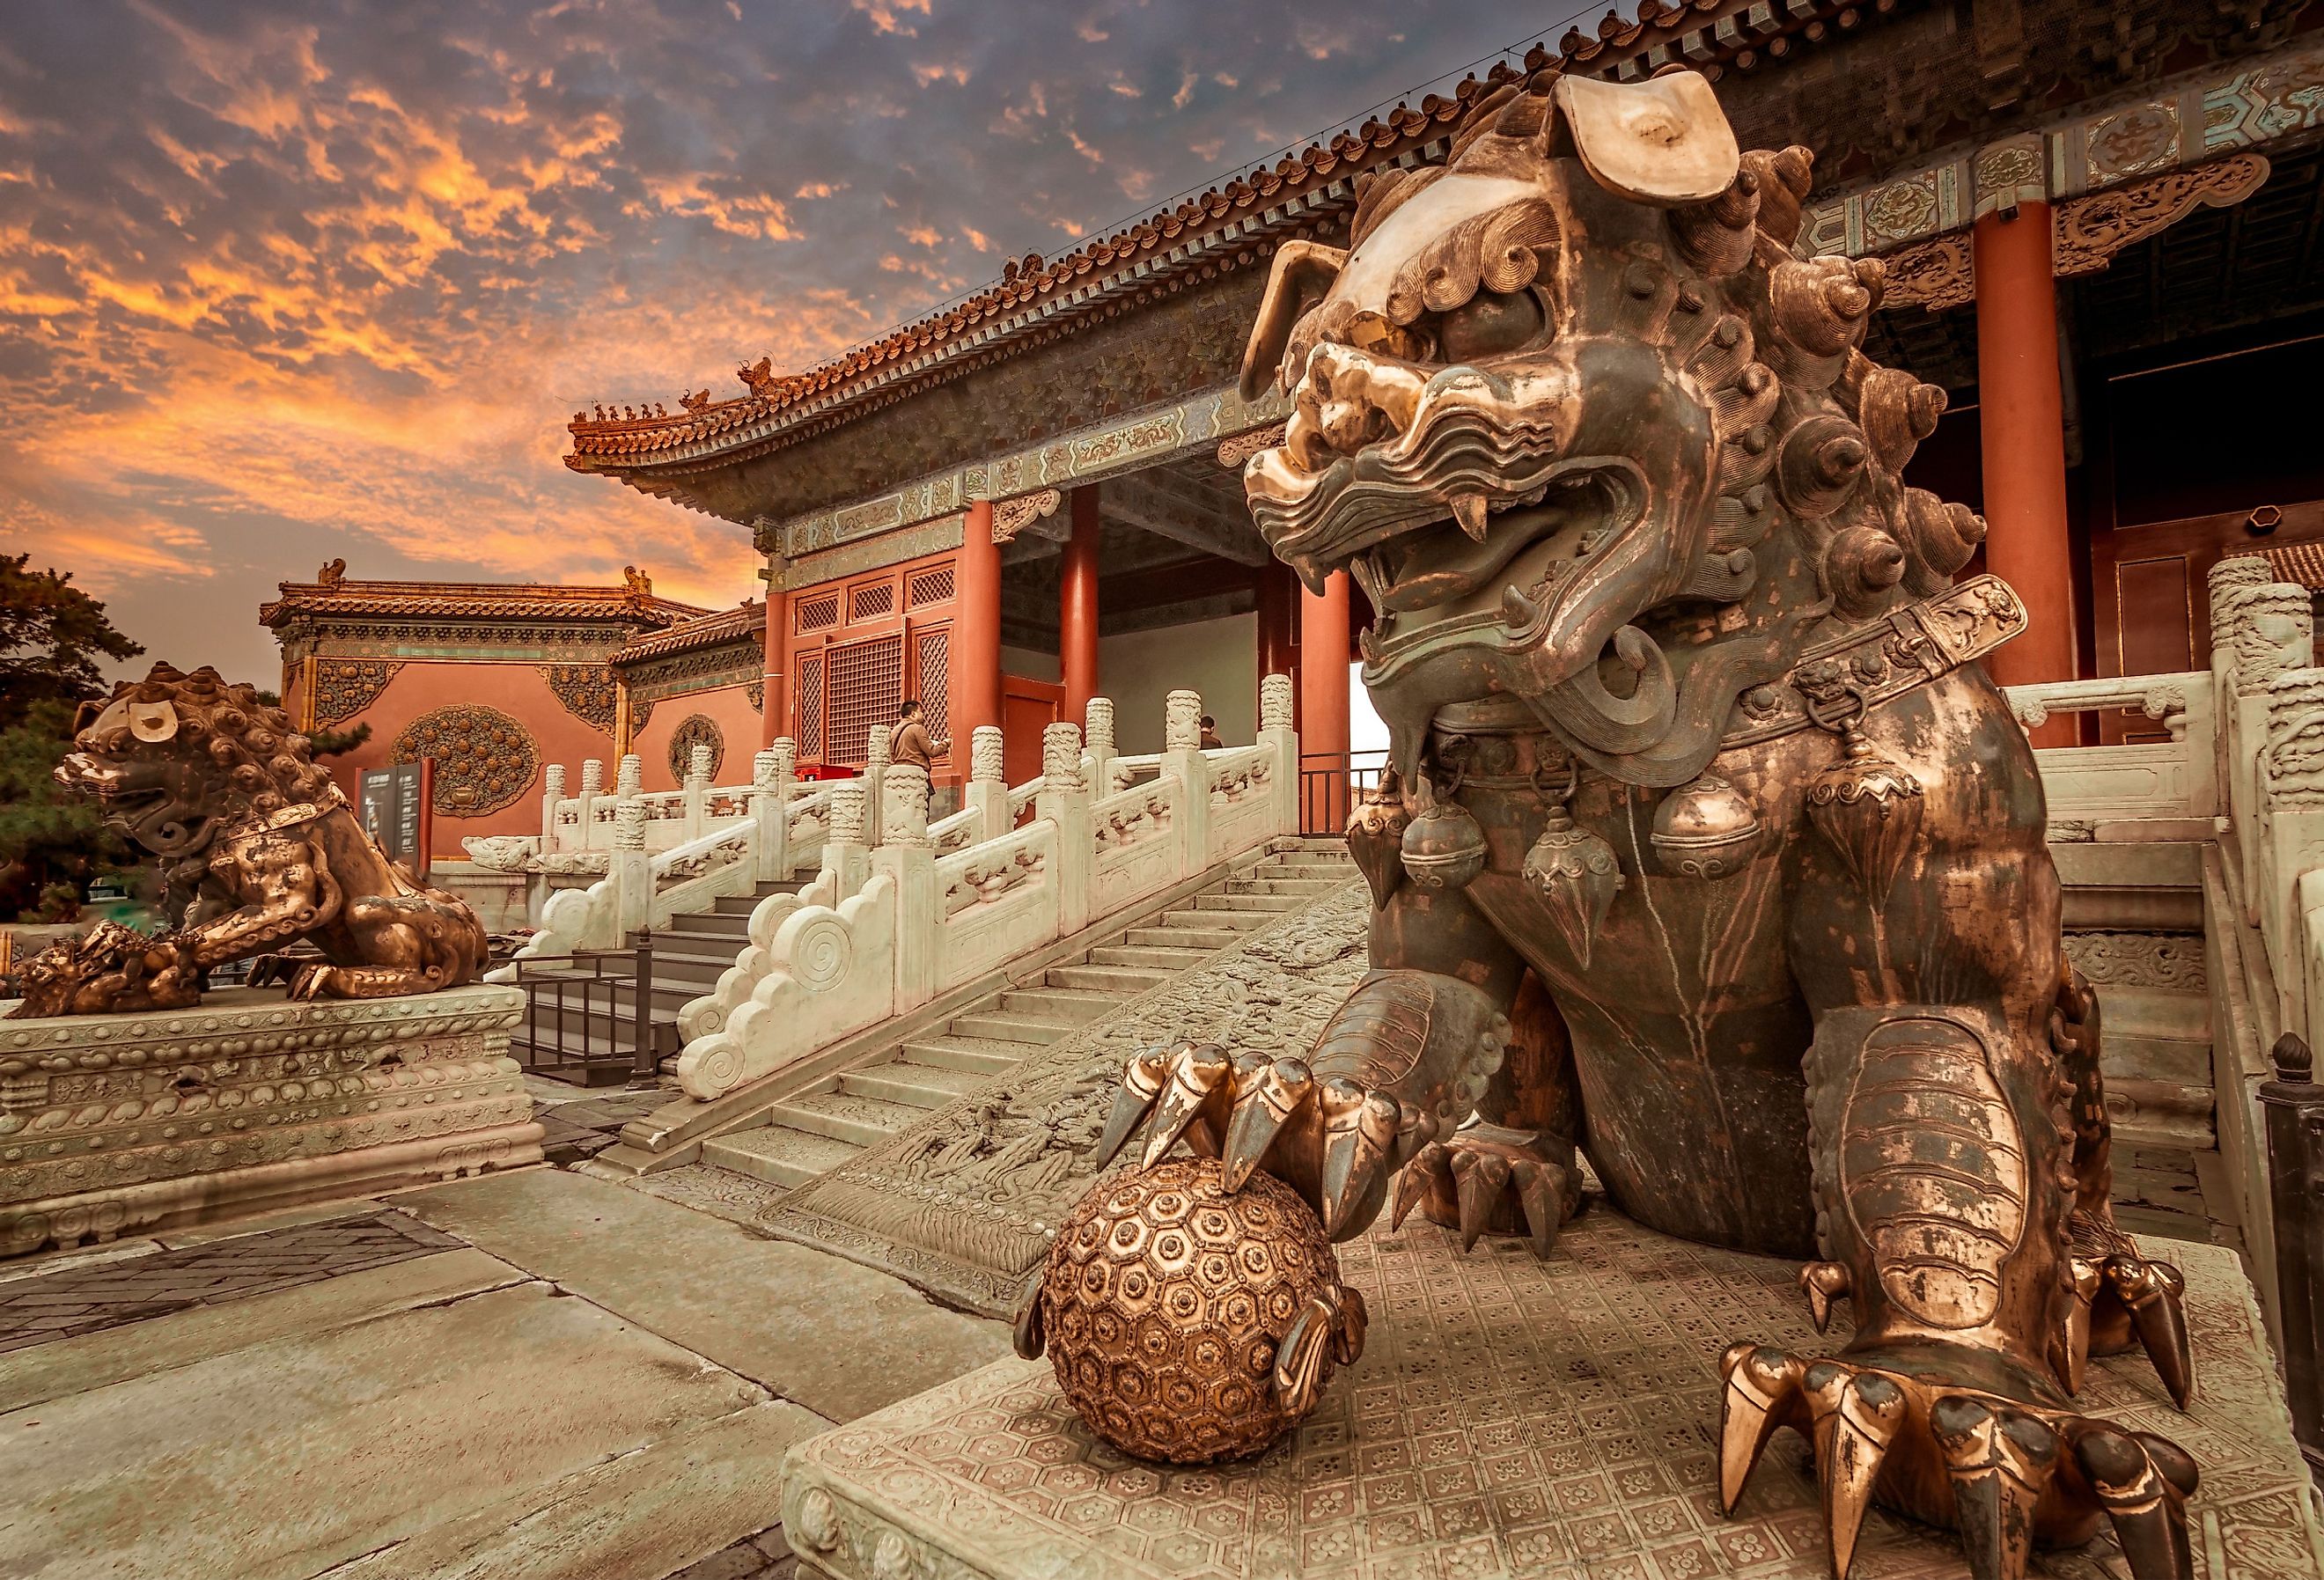 The bronze lion in the forbidden city, Beijing China. Image credit: GuoZhongHua via Shutterstock